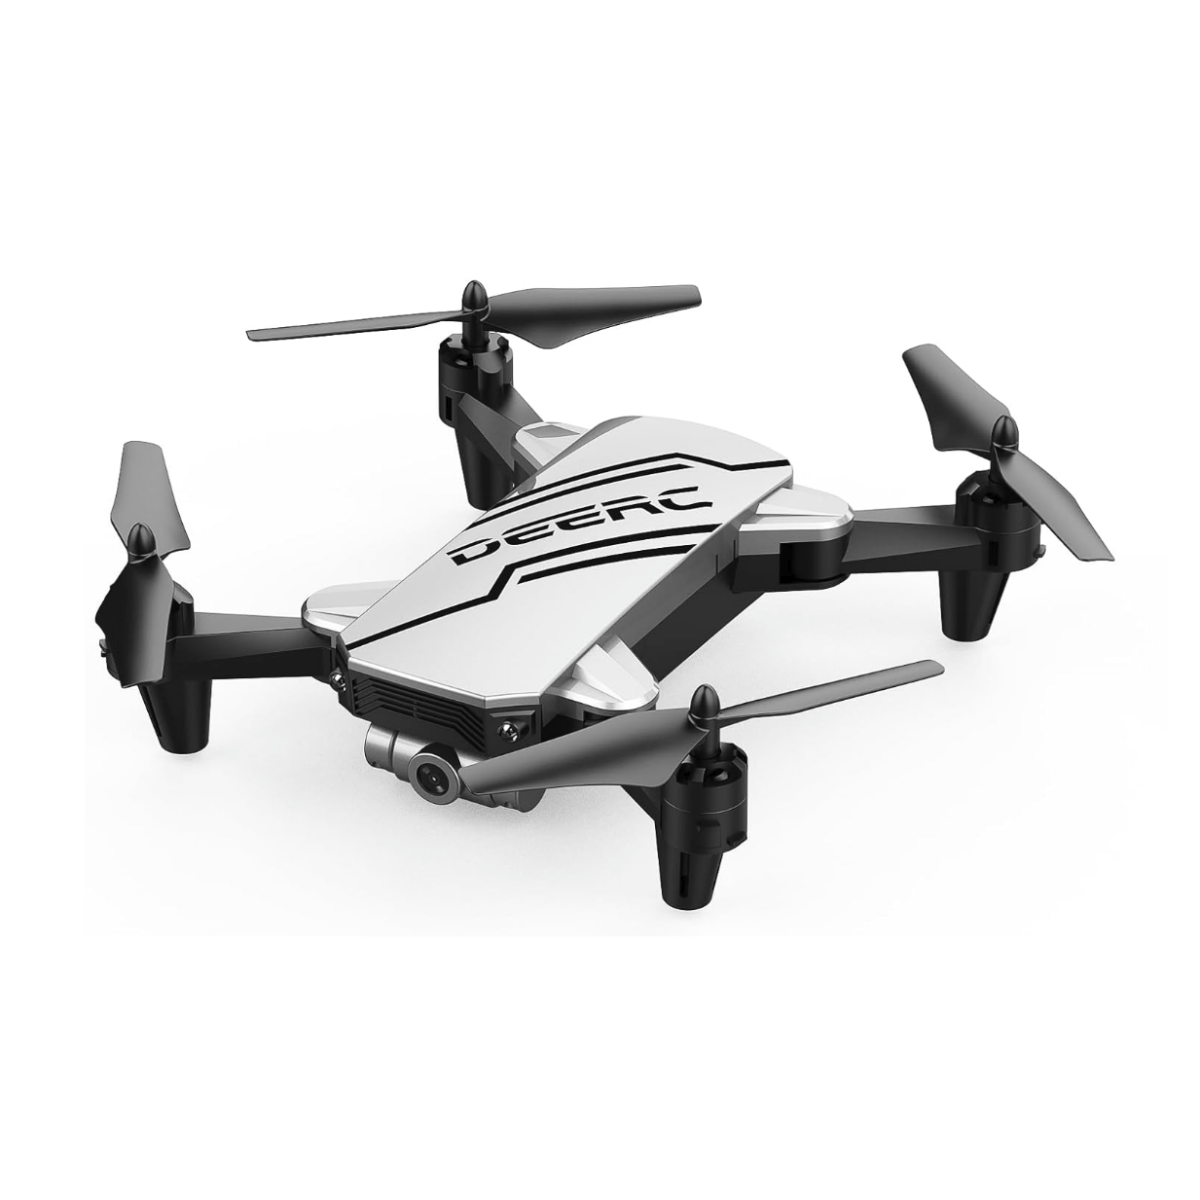 A silver Deerc D20 mini drone for kids